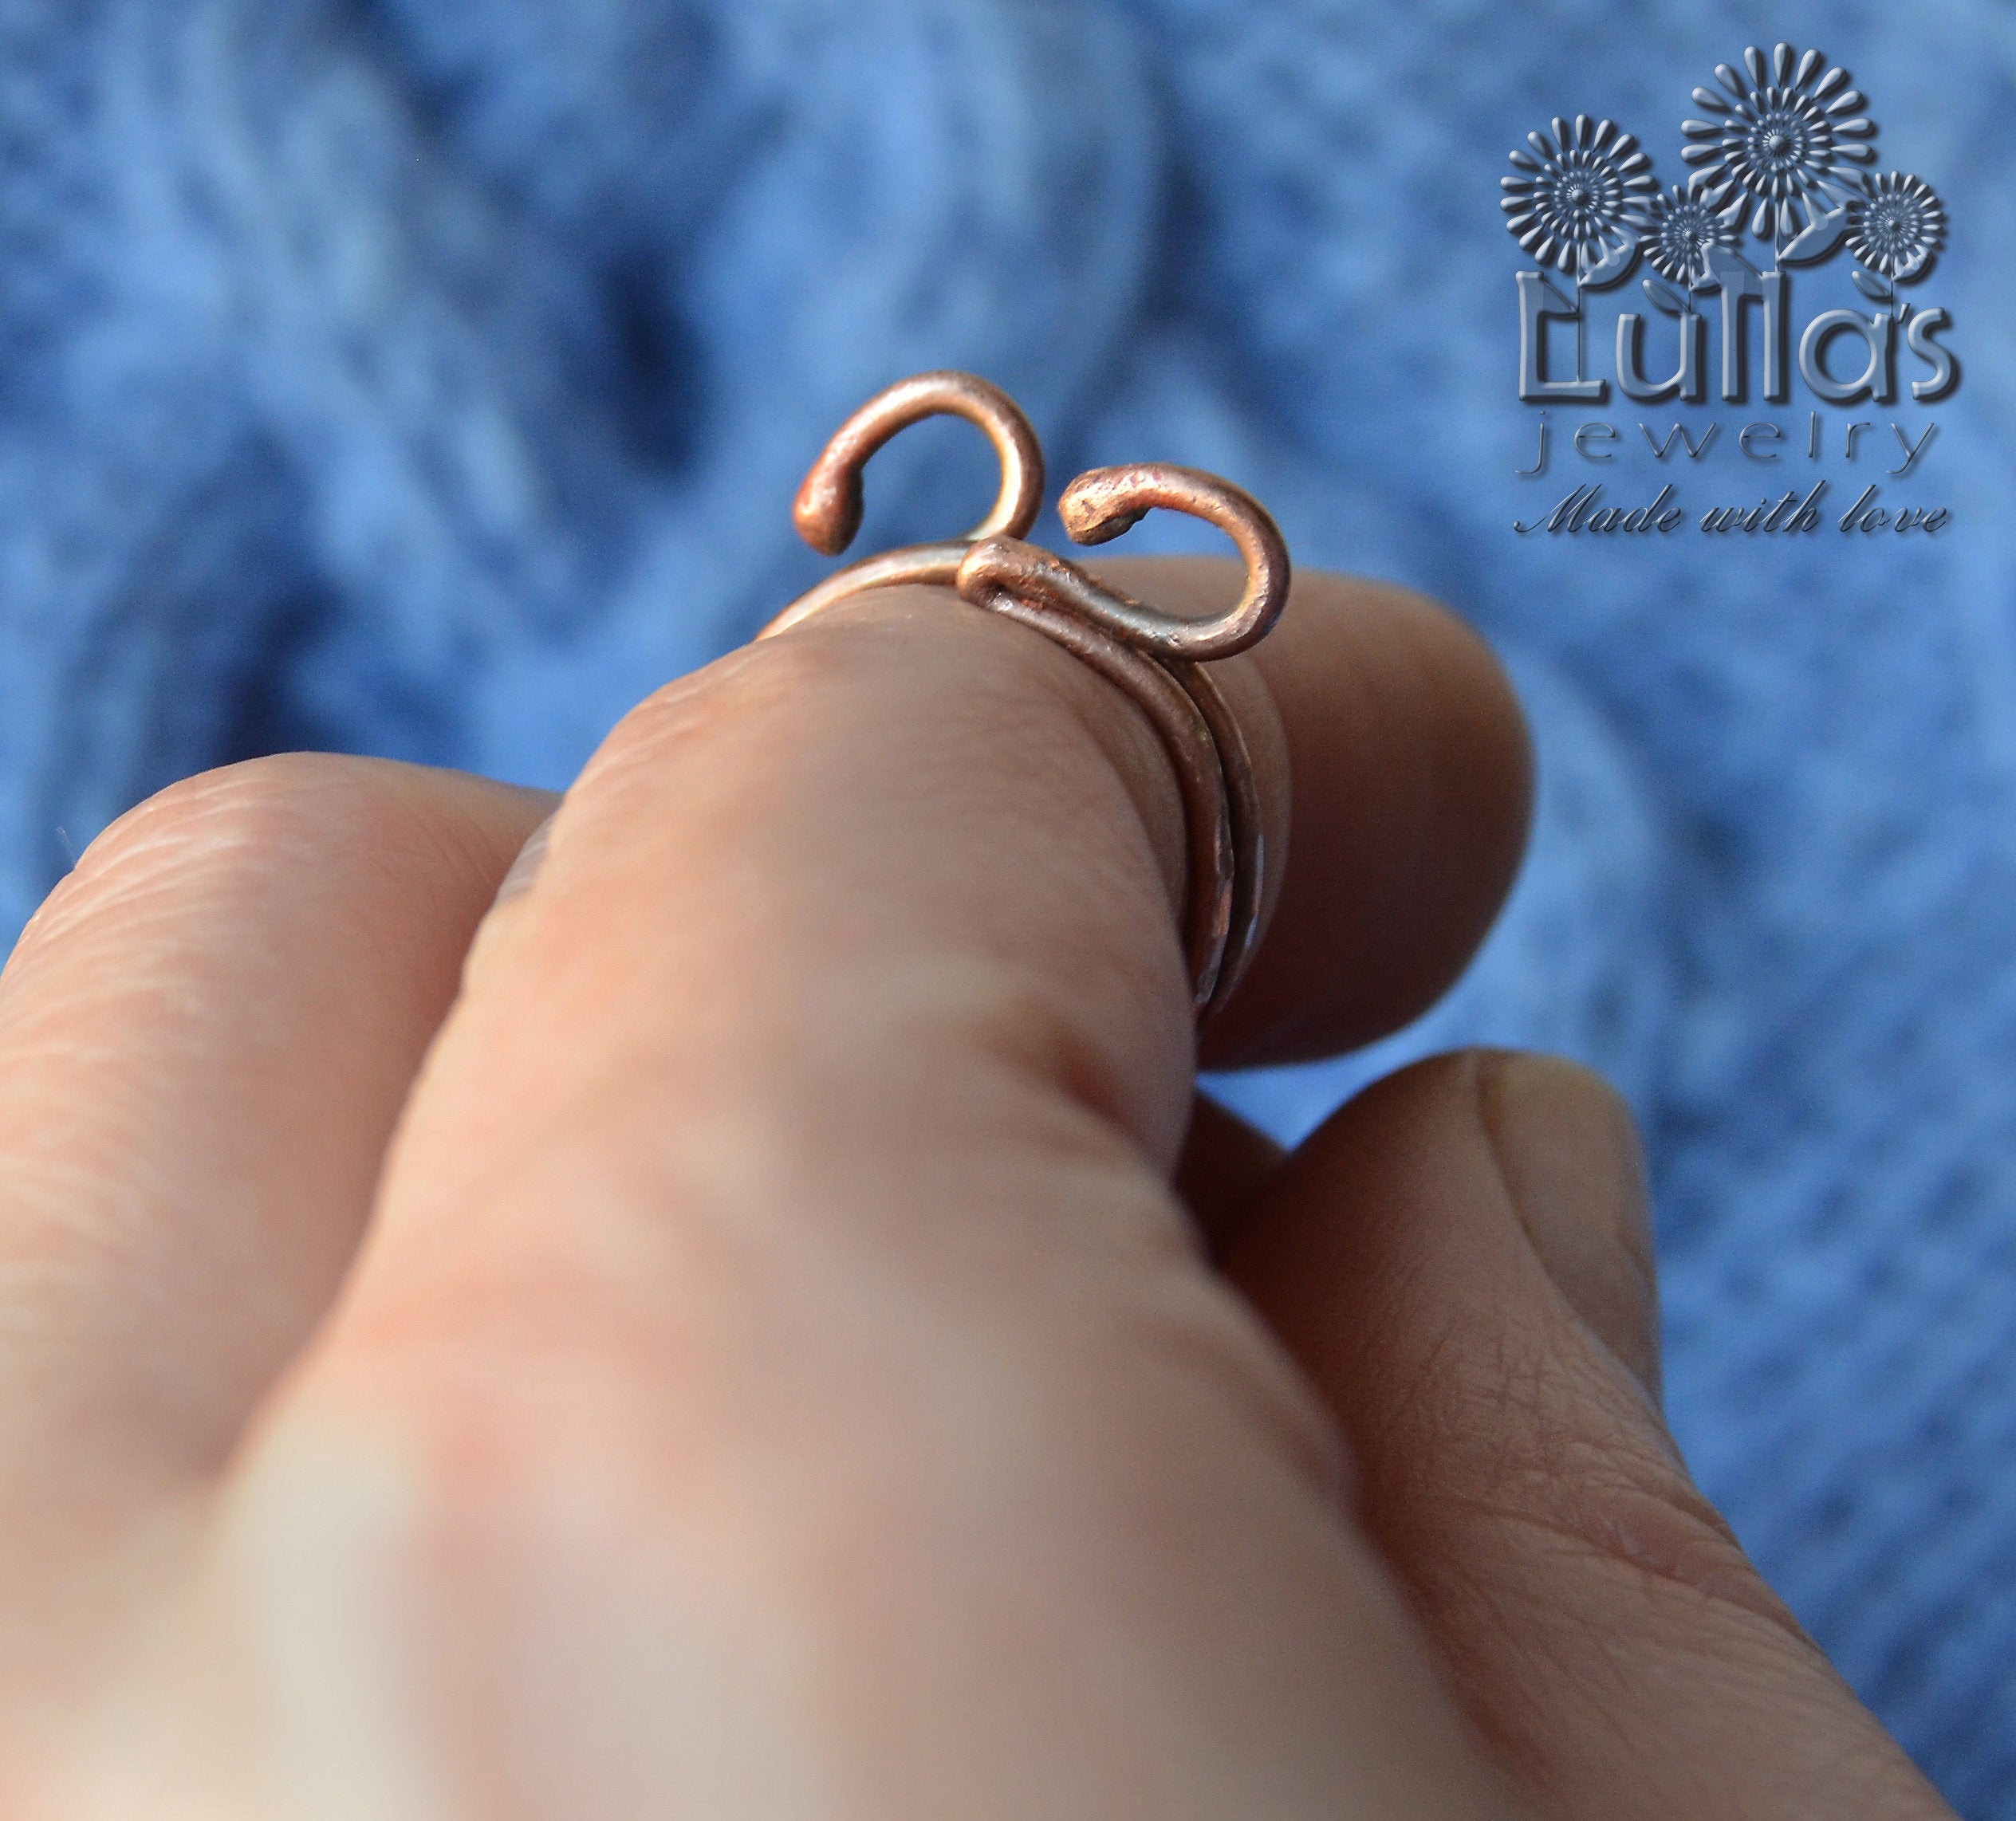 Best Deal for Echoollly Adjustable Knitting Loop Ring for DIY